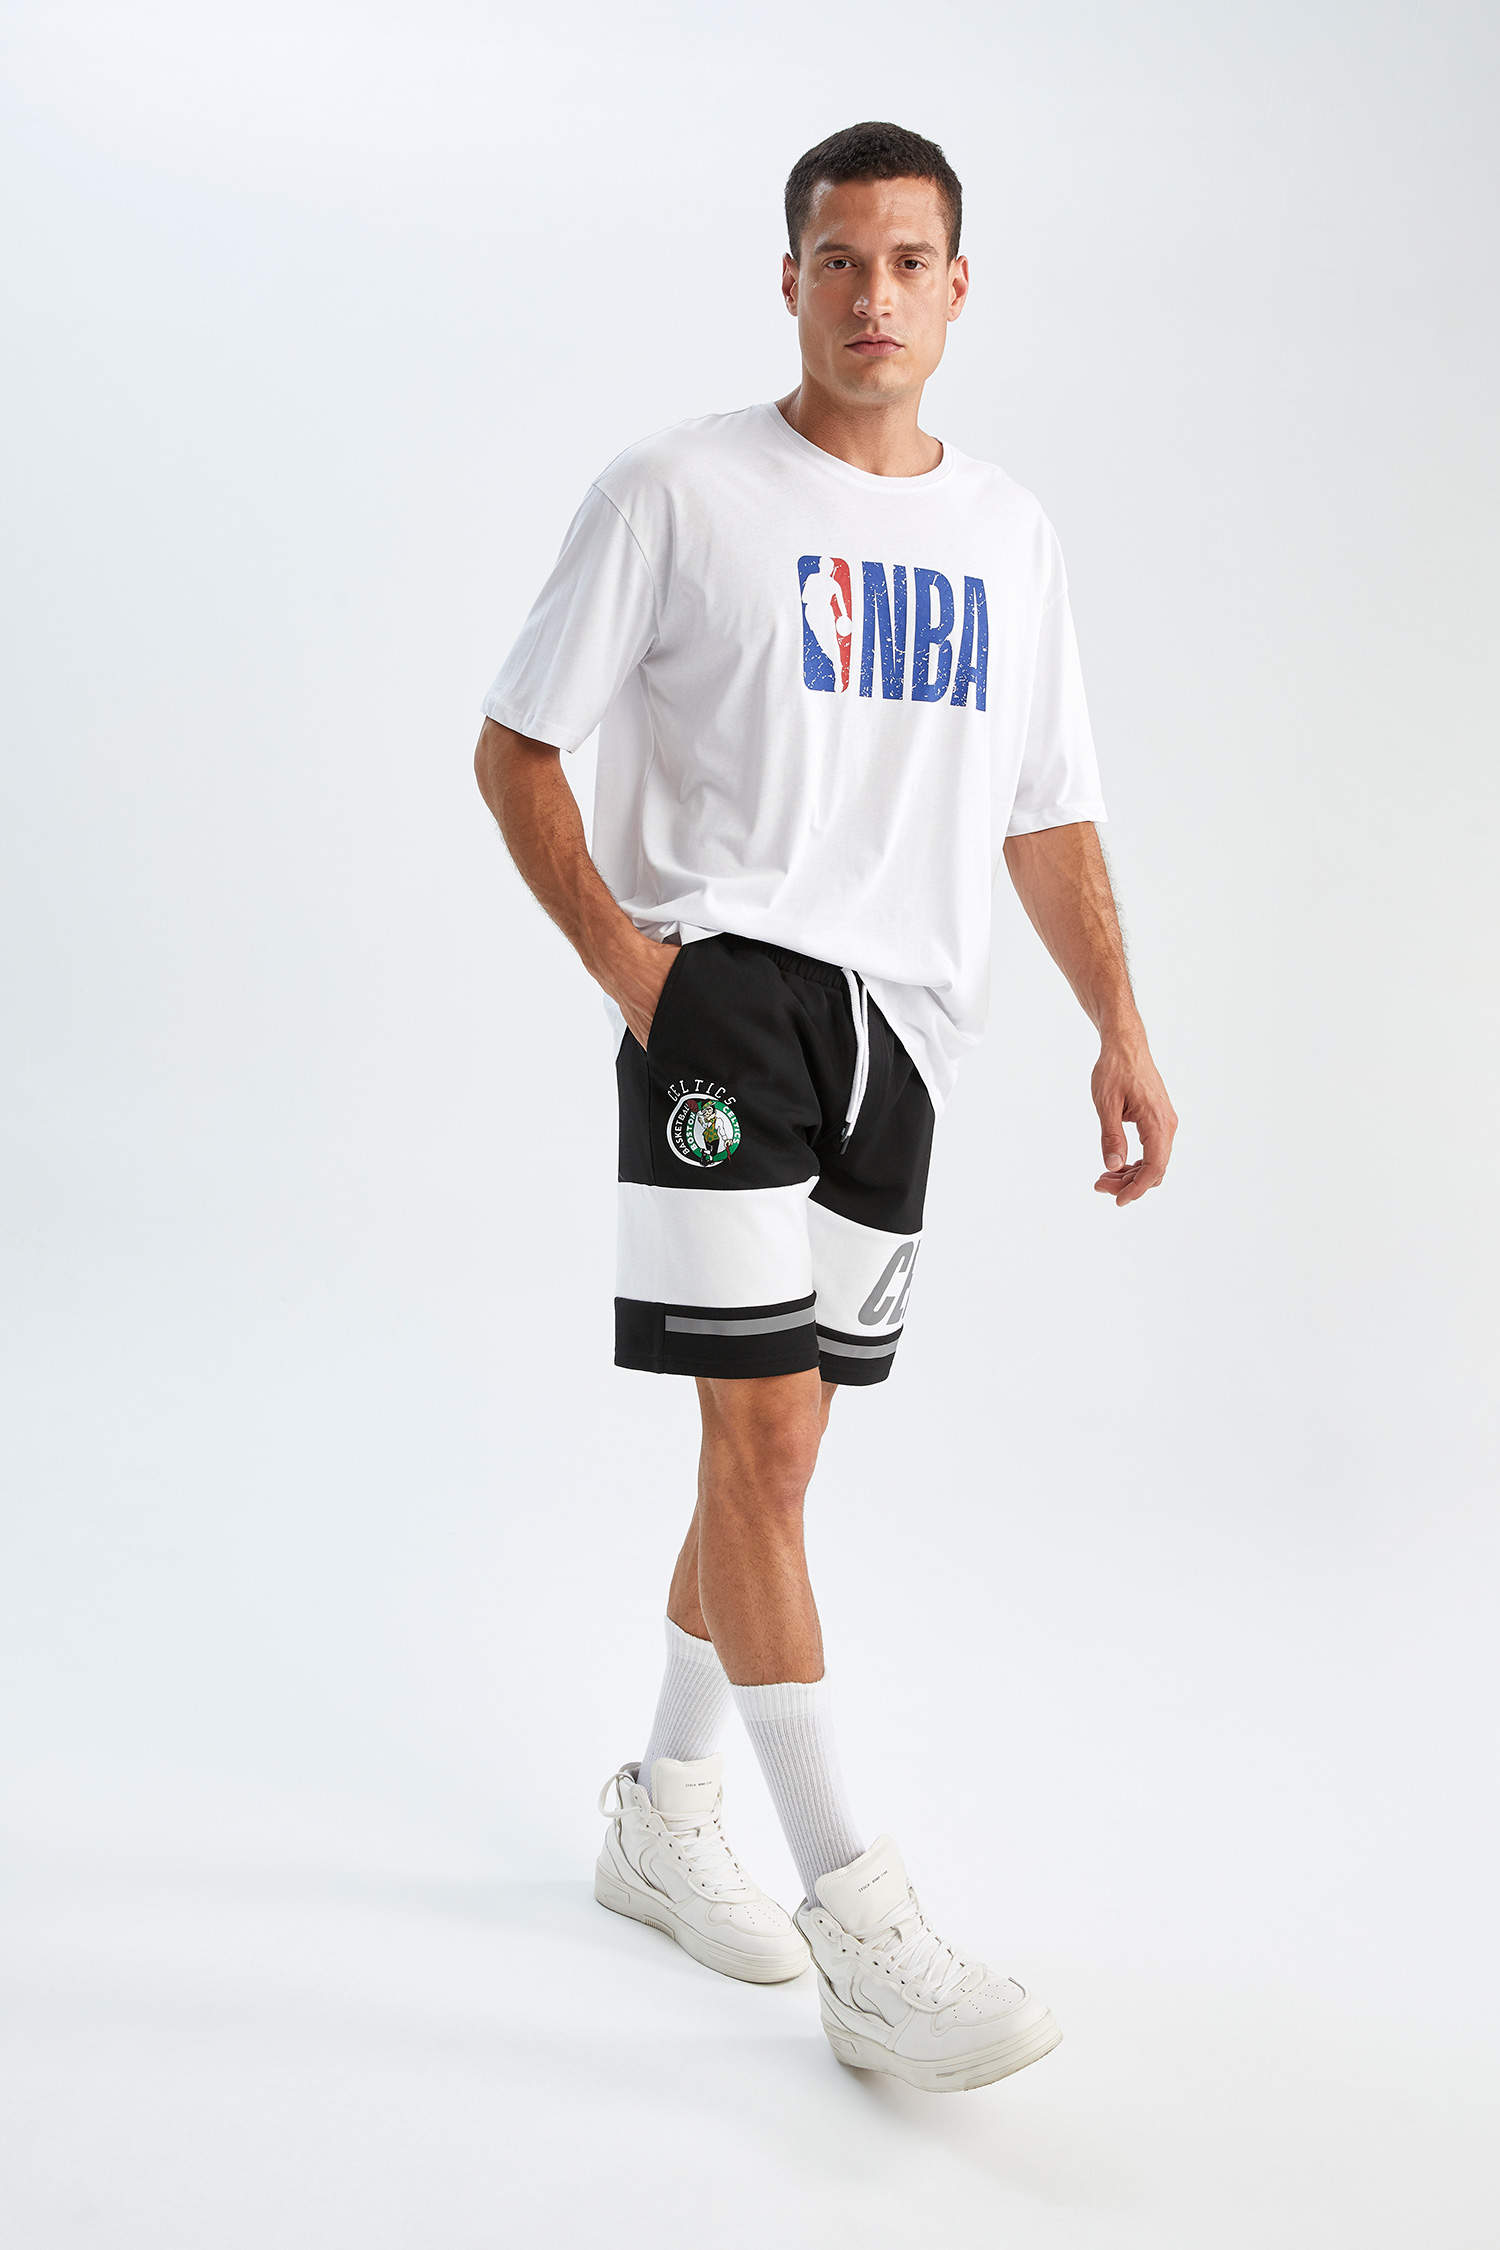 Thin Celtics t-shirt